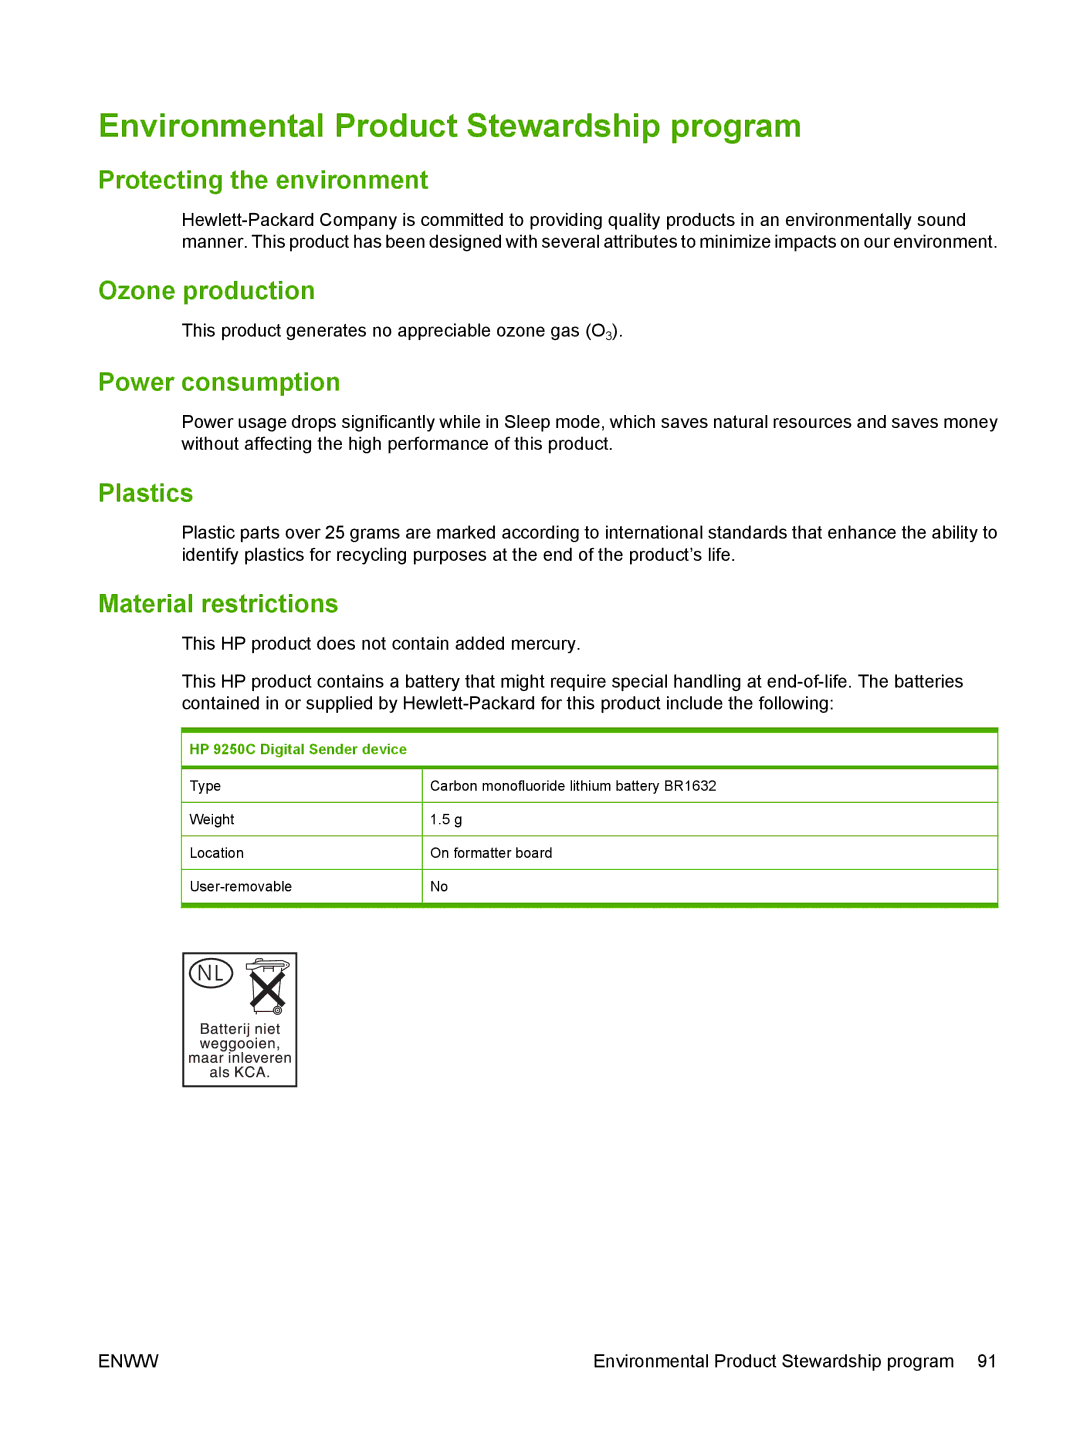 HP 9250C manual Environmental Product Stewardship program 